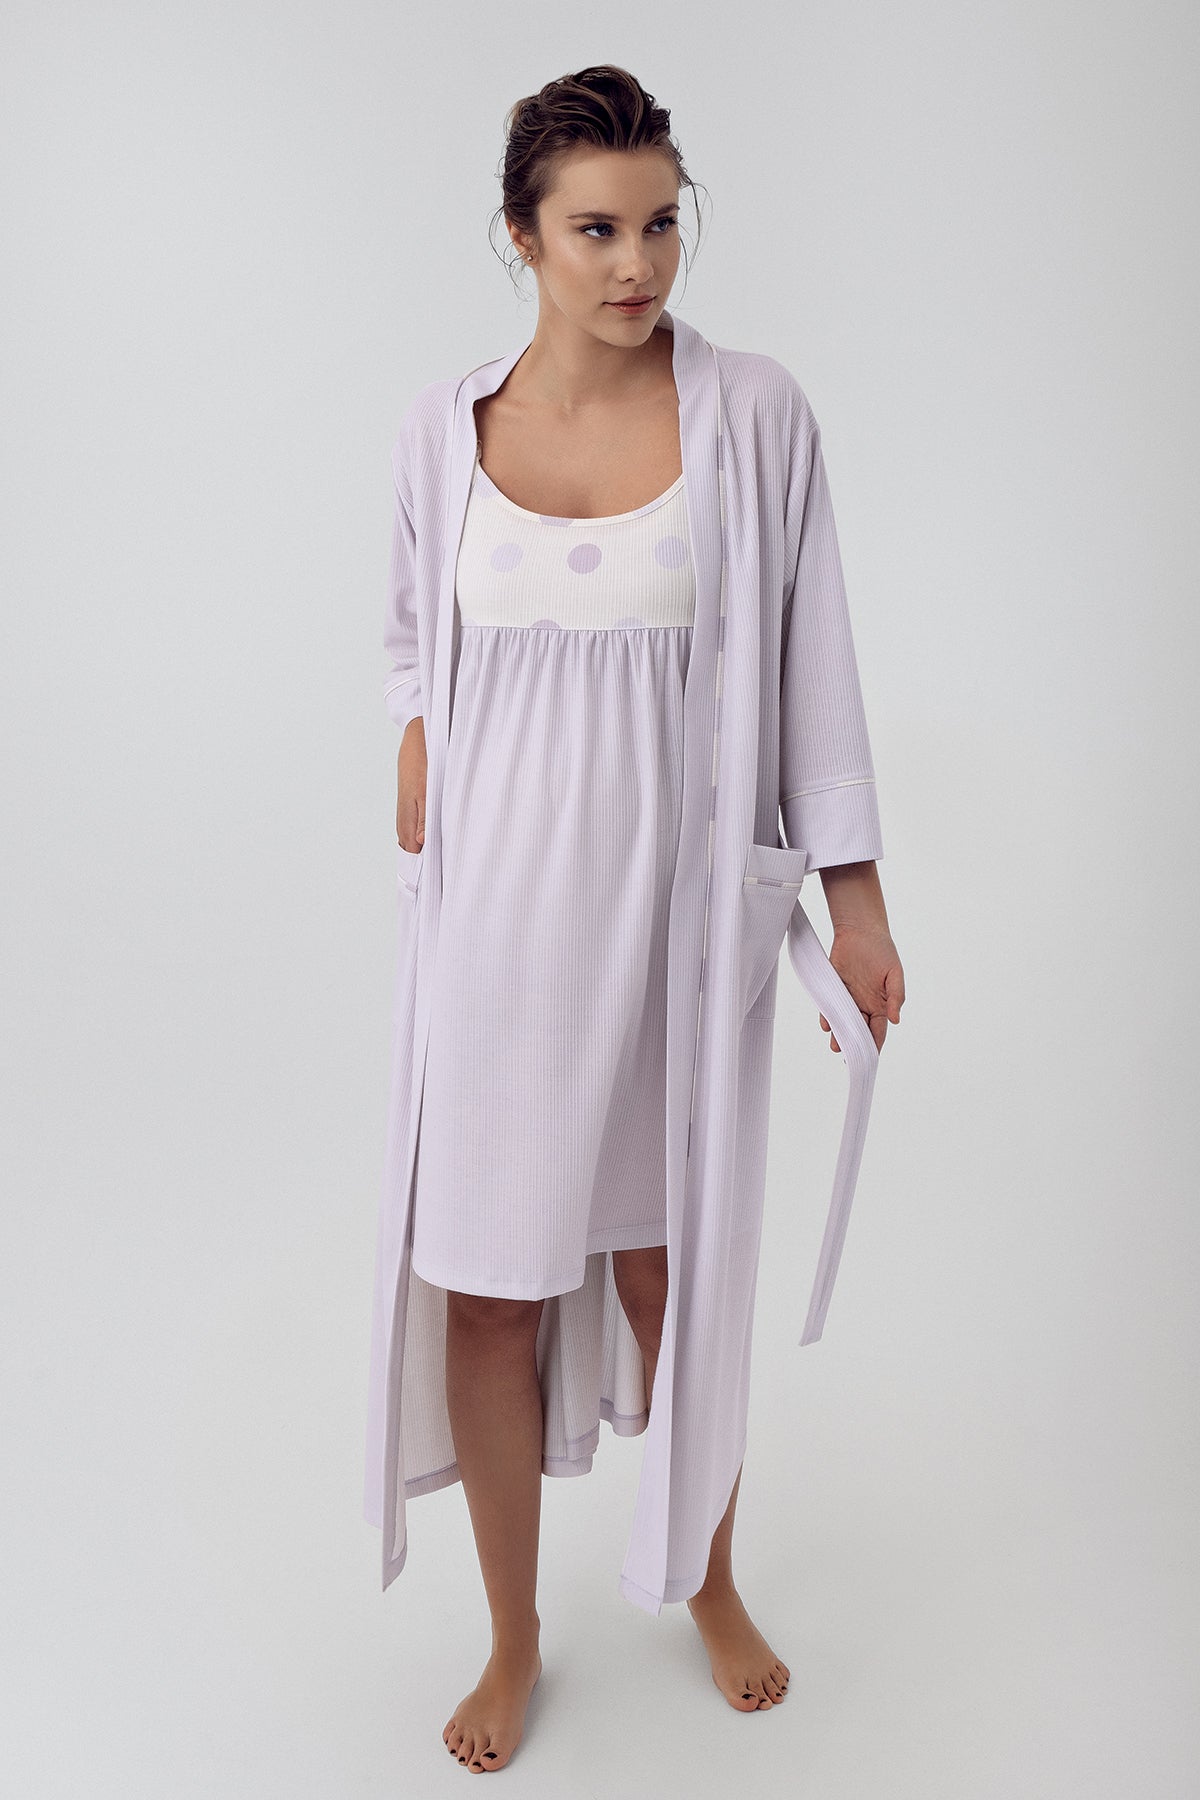 Shopymommy 16401 Polka Dot Maternity & Nursing Nightgown With Robe Lilac